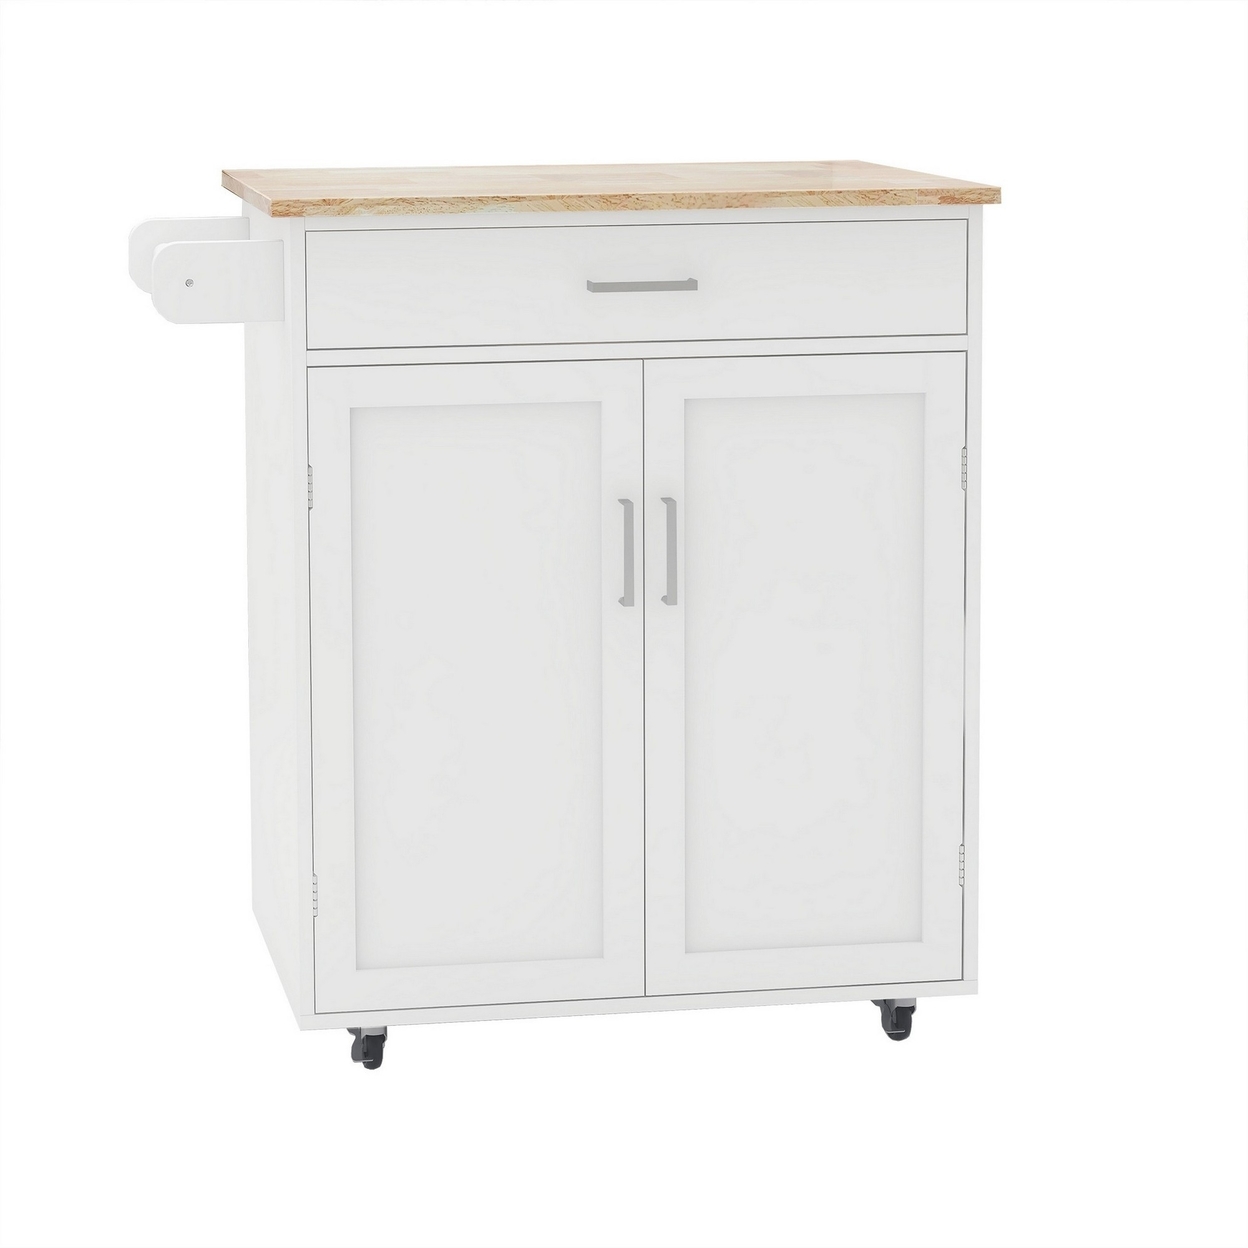 36 Inch Kitchen Islend With Towel Rack, 1 Double Door Cabinet, White Wood- Saltoro Sherpi